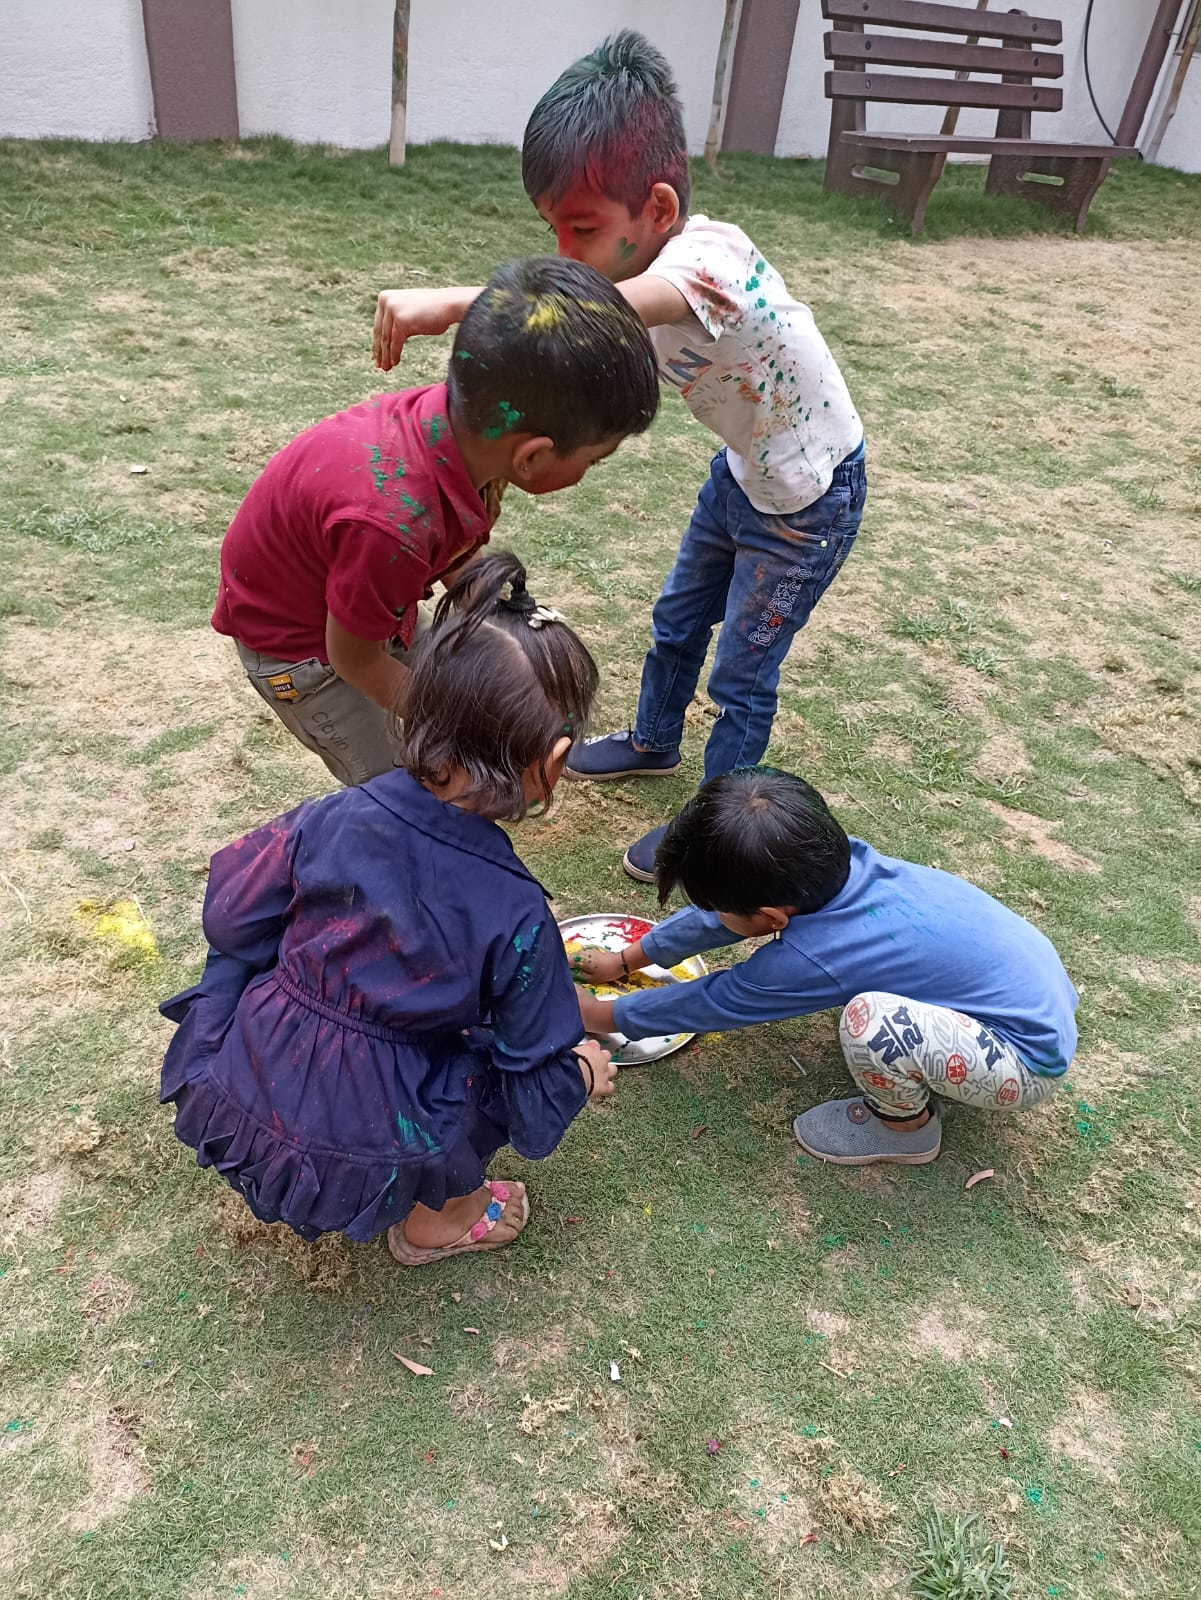 Holi Celebration At Balvatika Play School Vapi, Gujarat